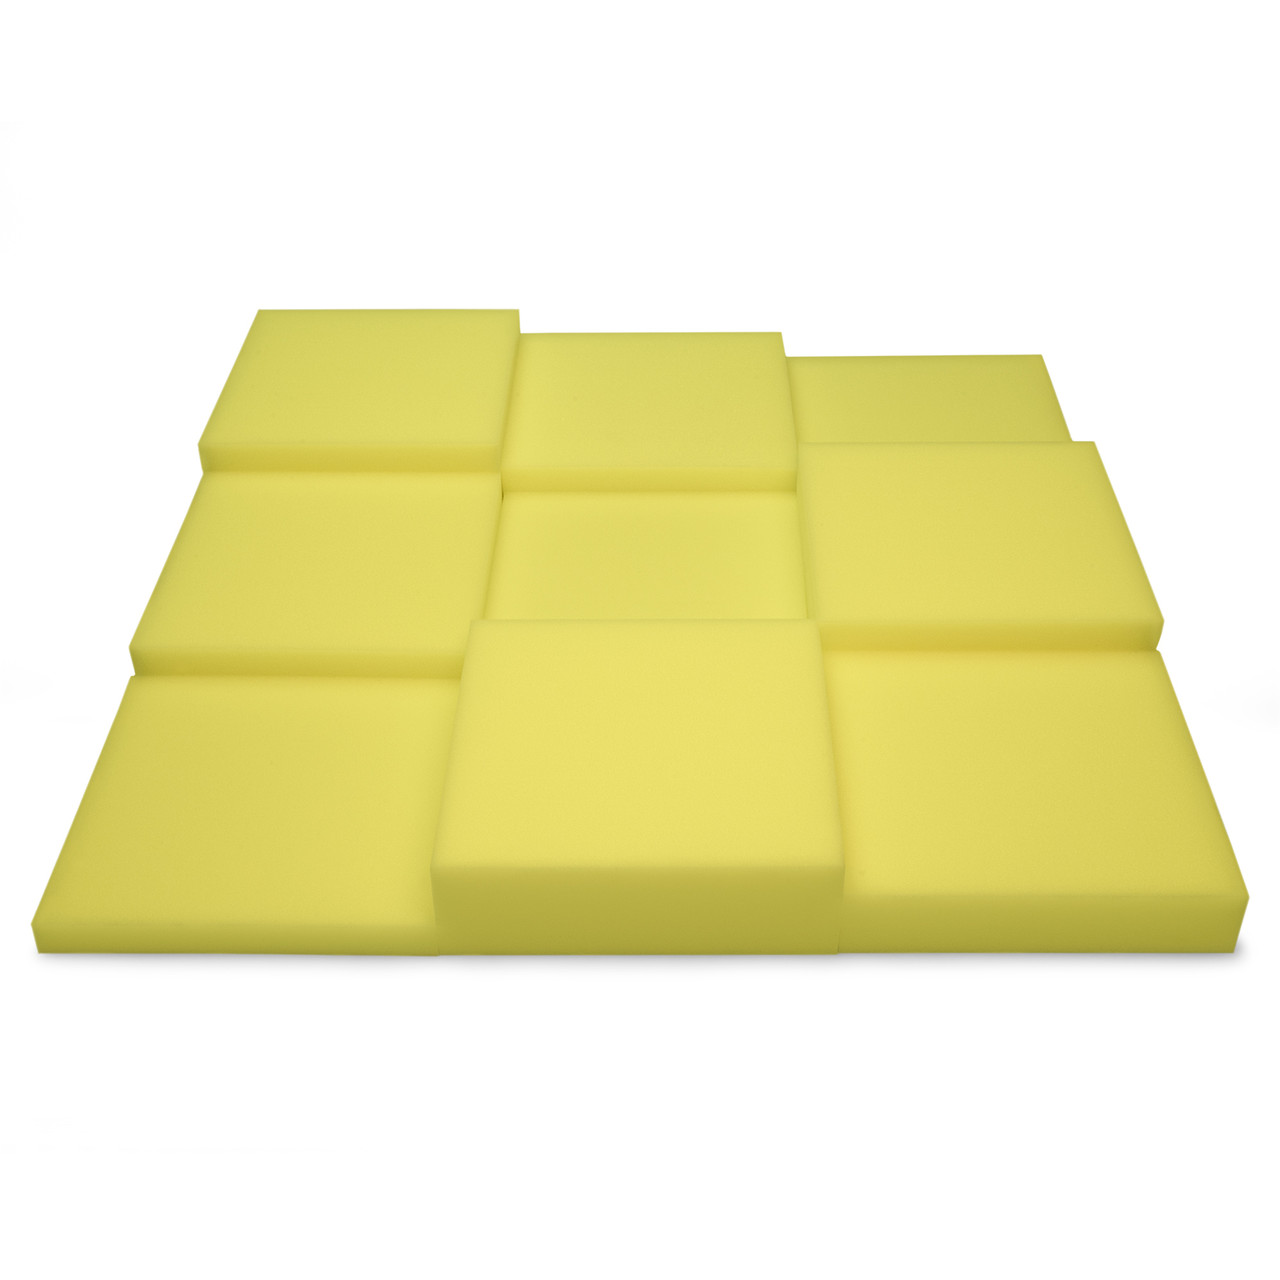 Панель из акустического поролона Ecosound Pattern Yellow 60мм, 60х60см цвет желтый